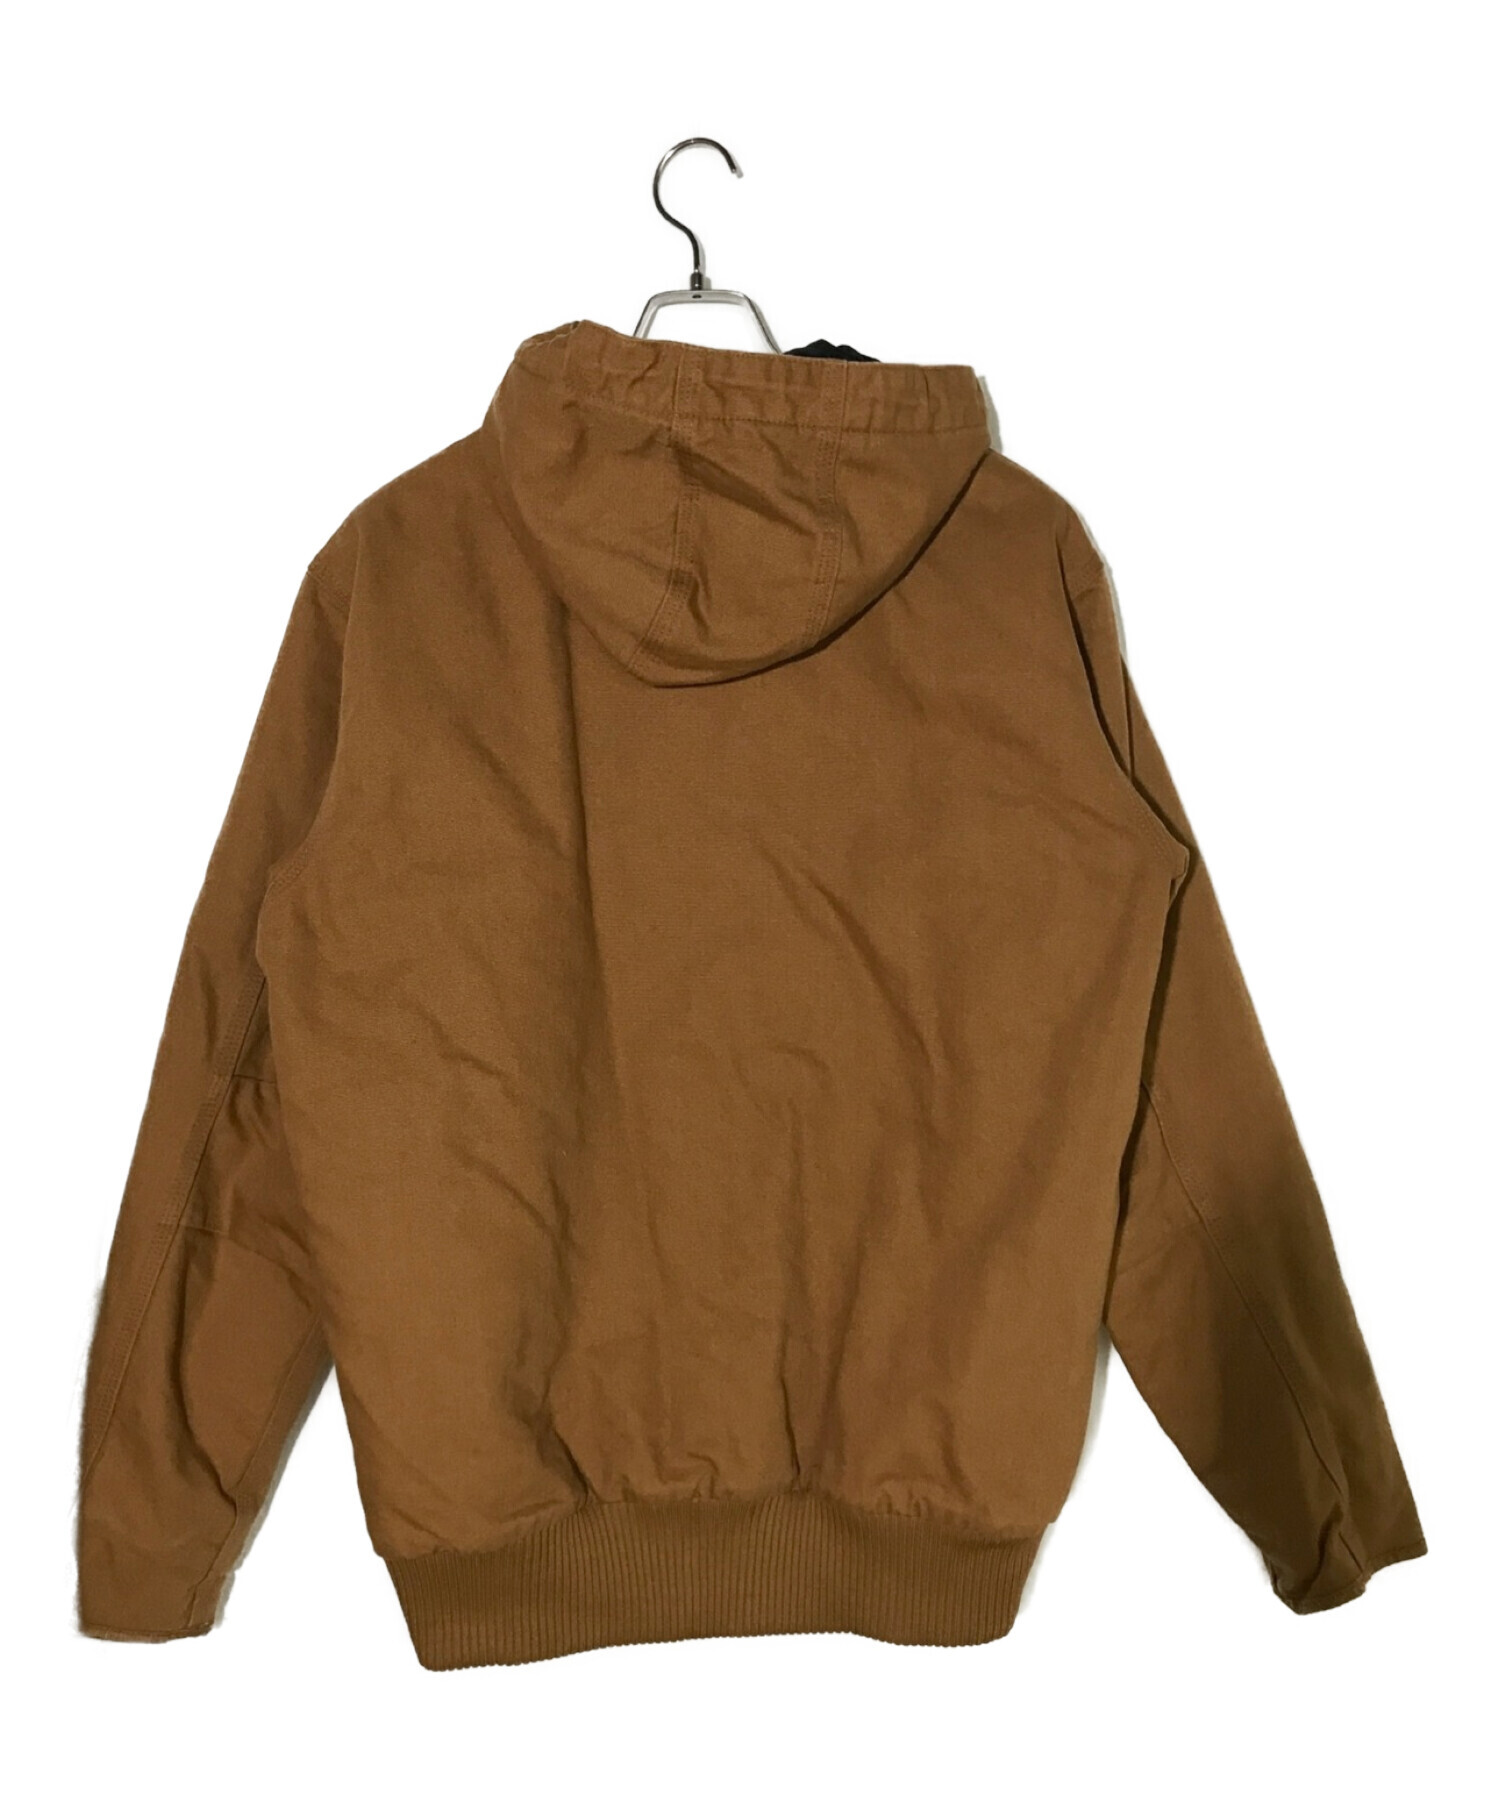 Carharrt brown mens jacket Size M